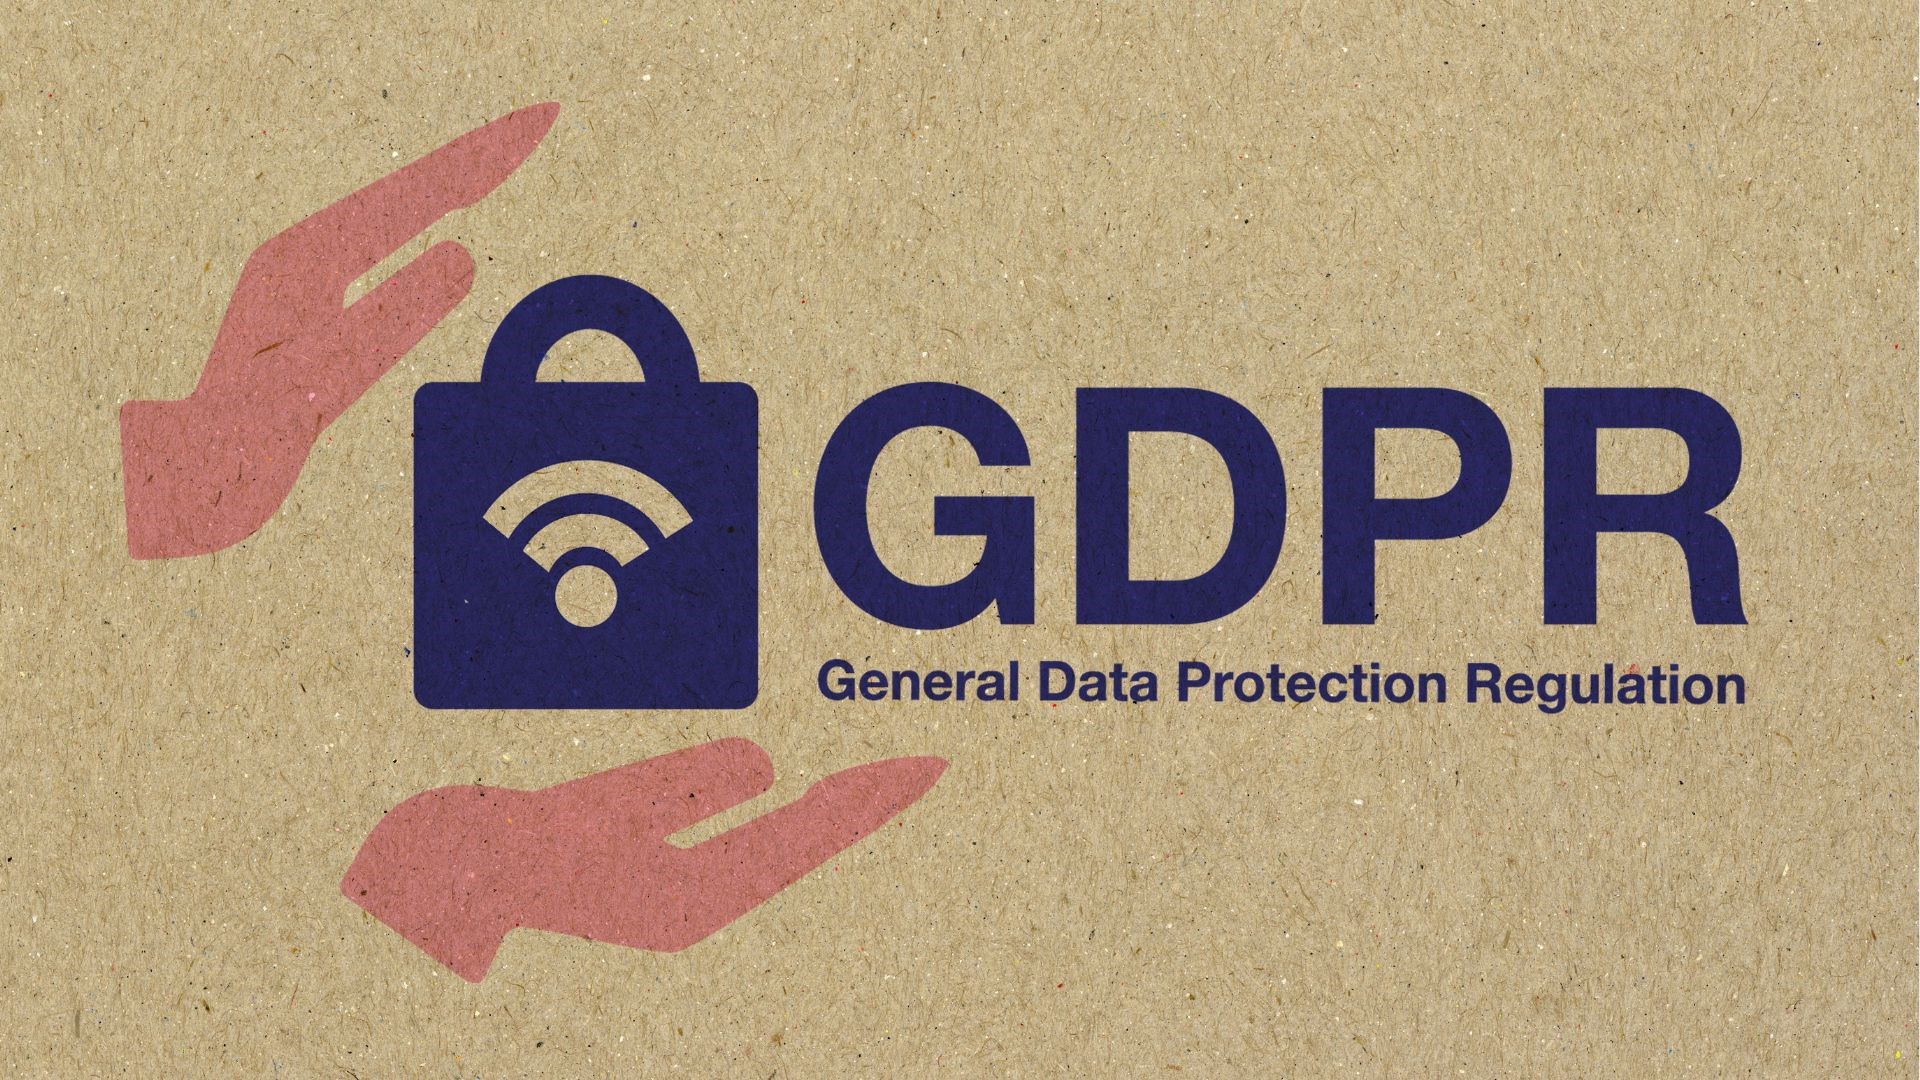 General data protection regulation (GDPR)